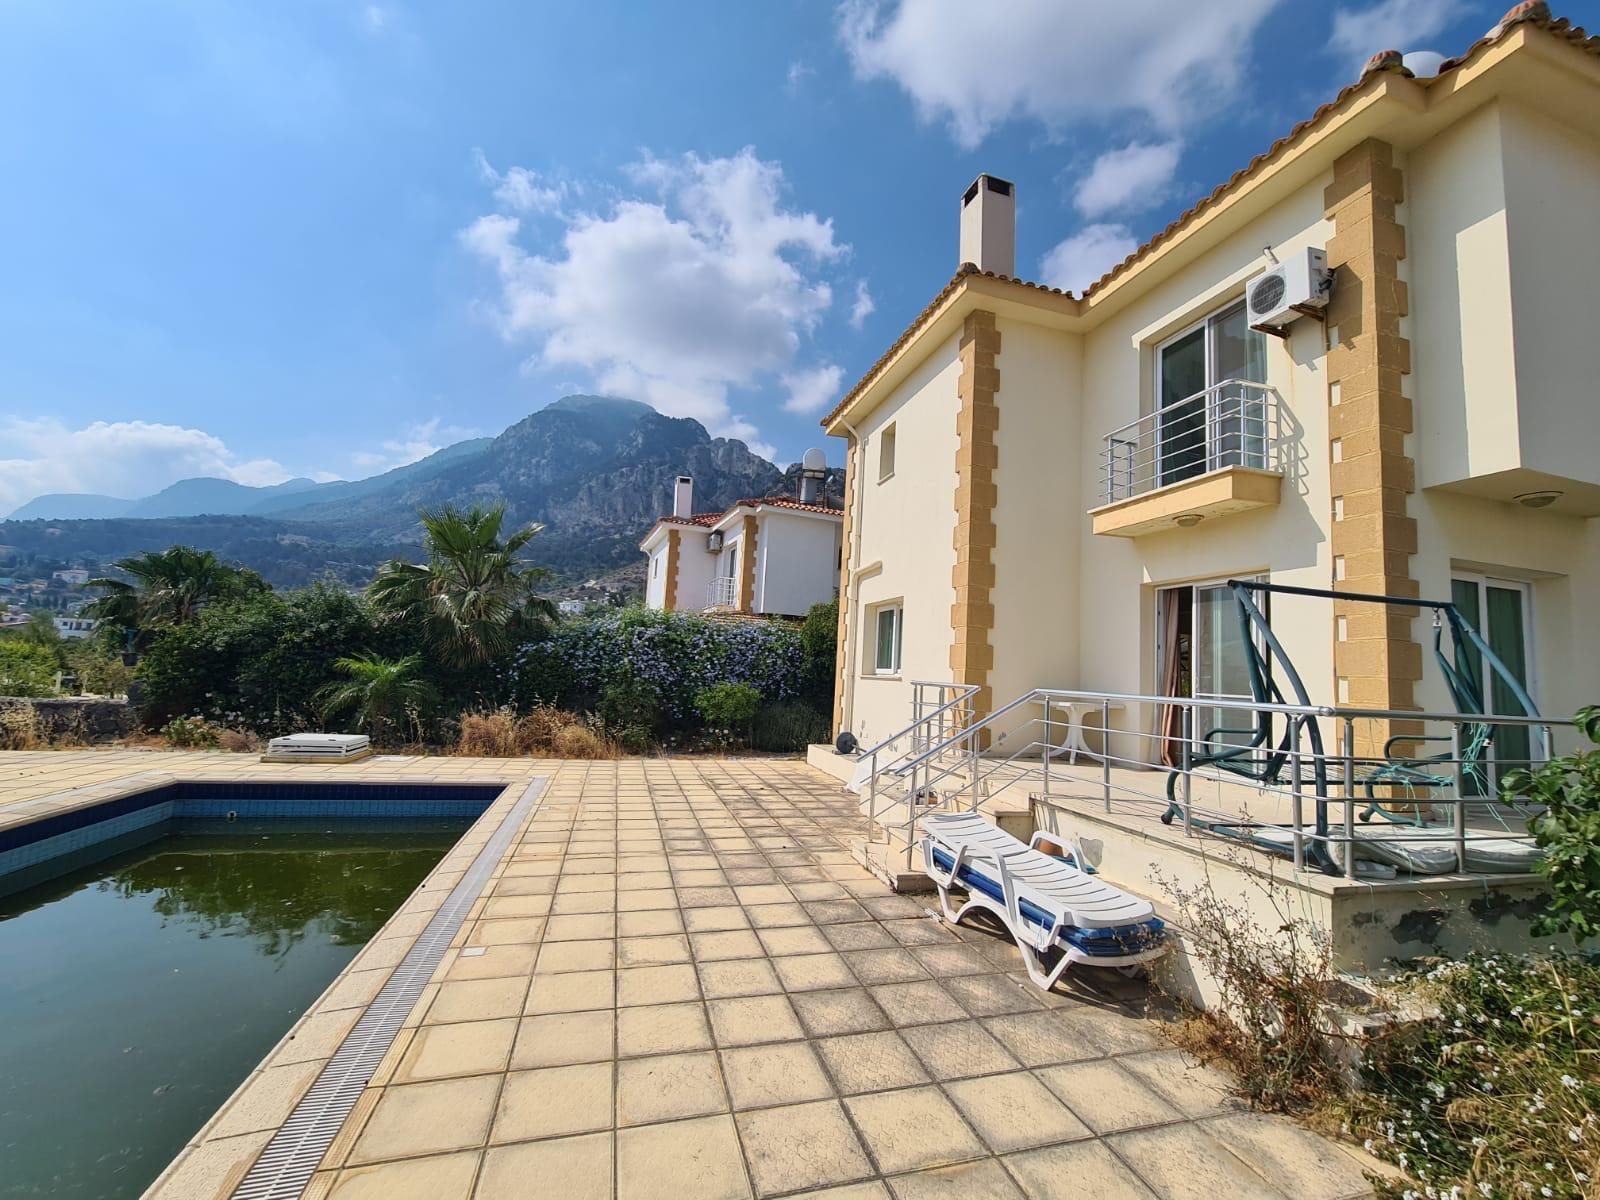 3 bedroom villa for sale in Kyrenia, Karshiyaka-34b062d2-fc62-442d-8094-1d235aa67886